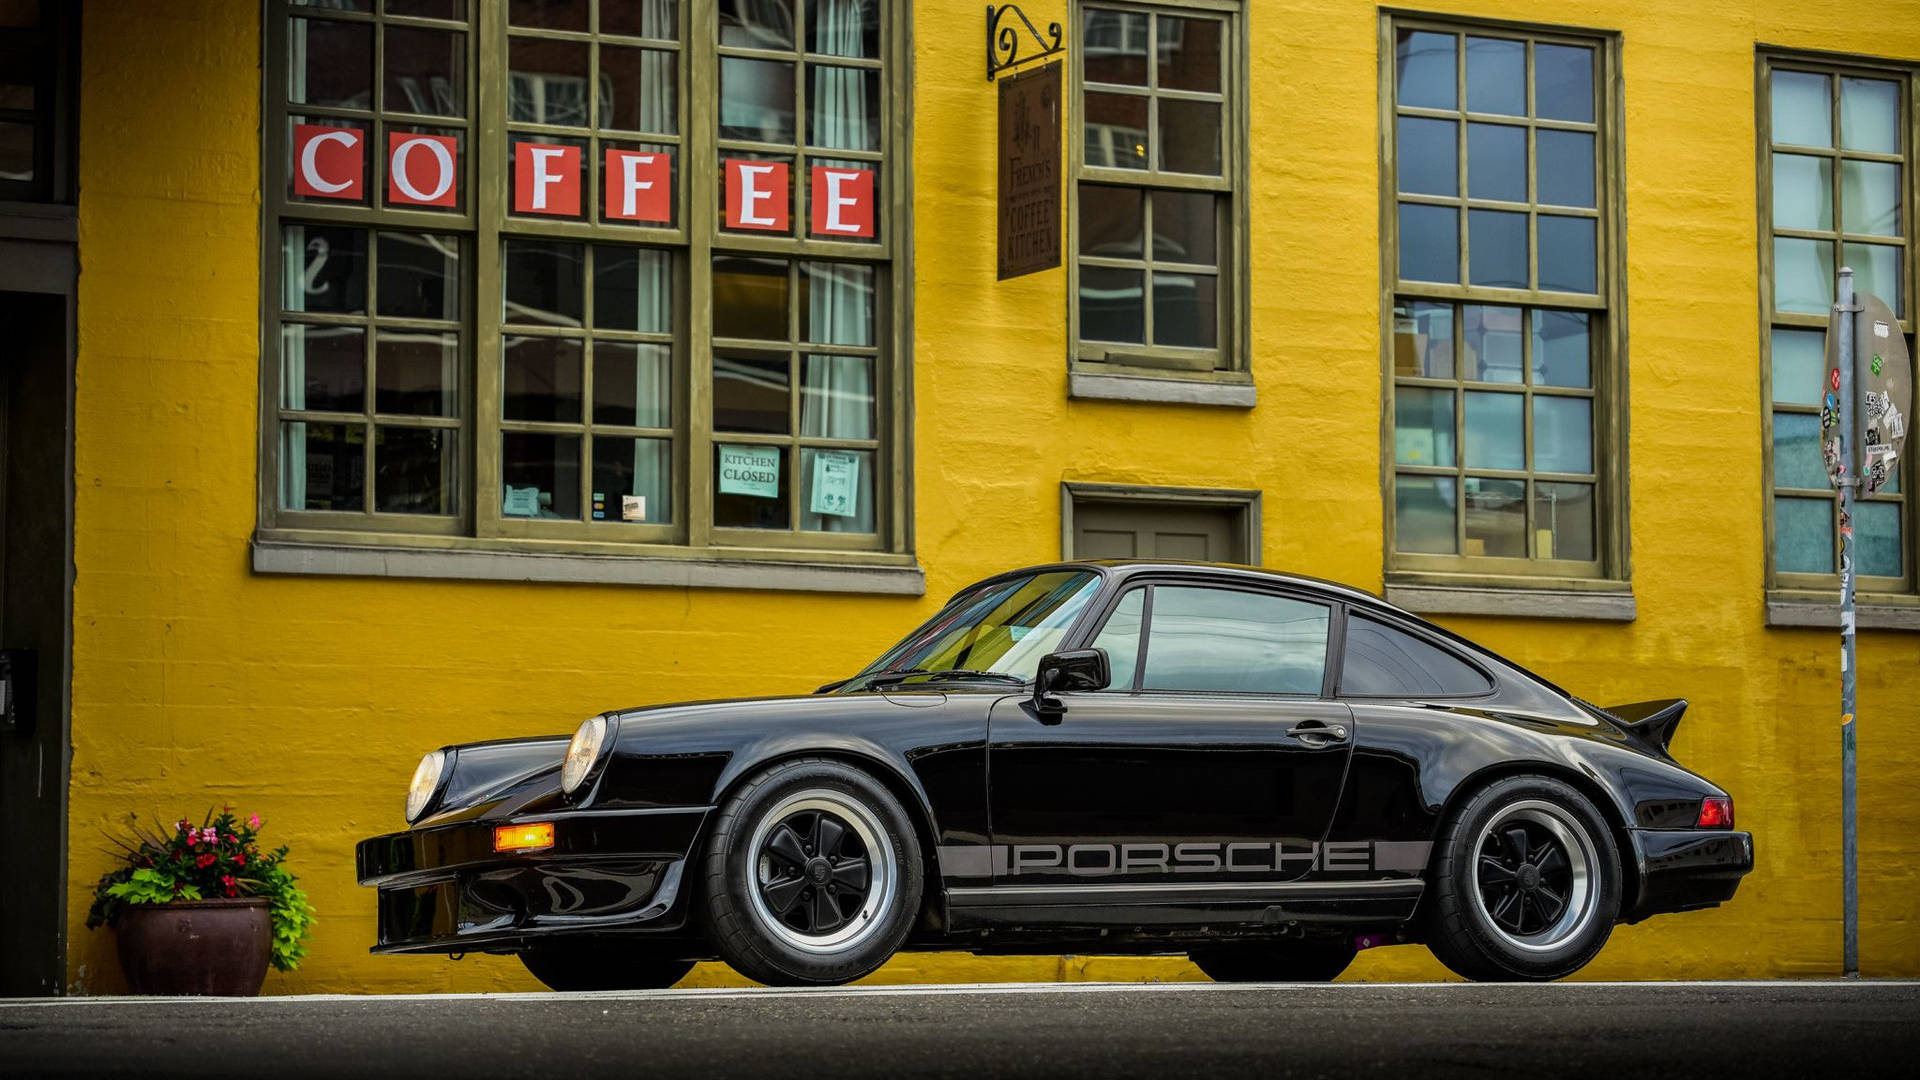 Porsche 911 And Coffee House Wallpaper